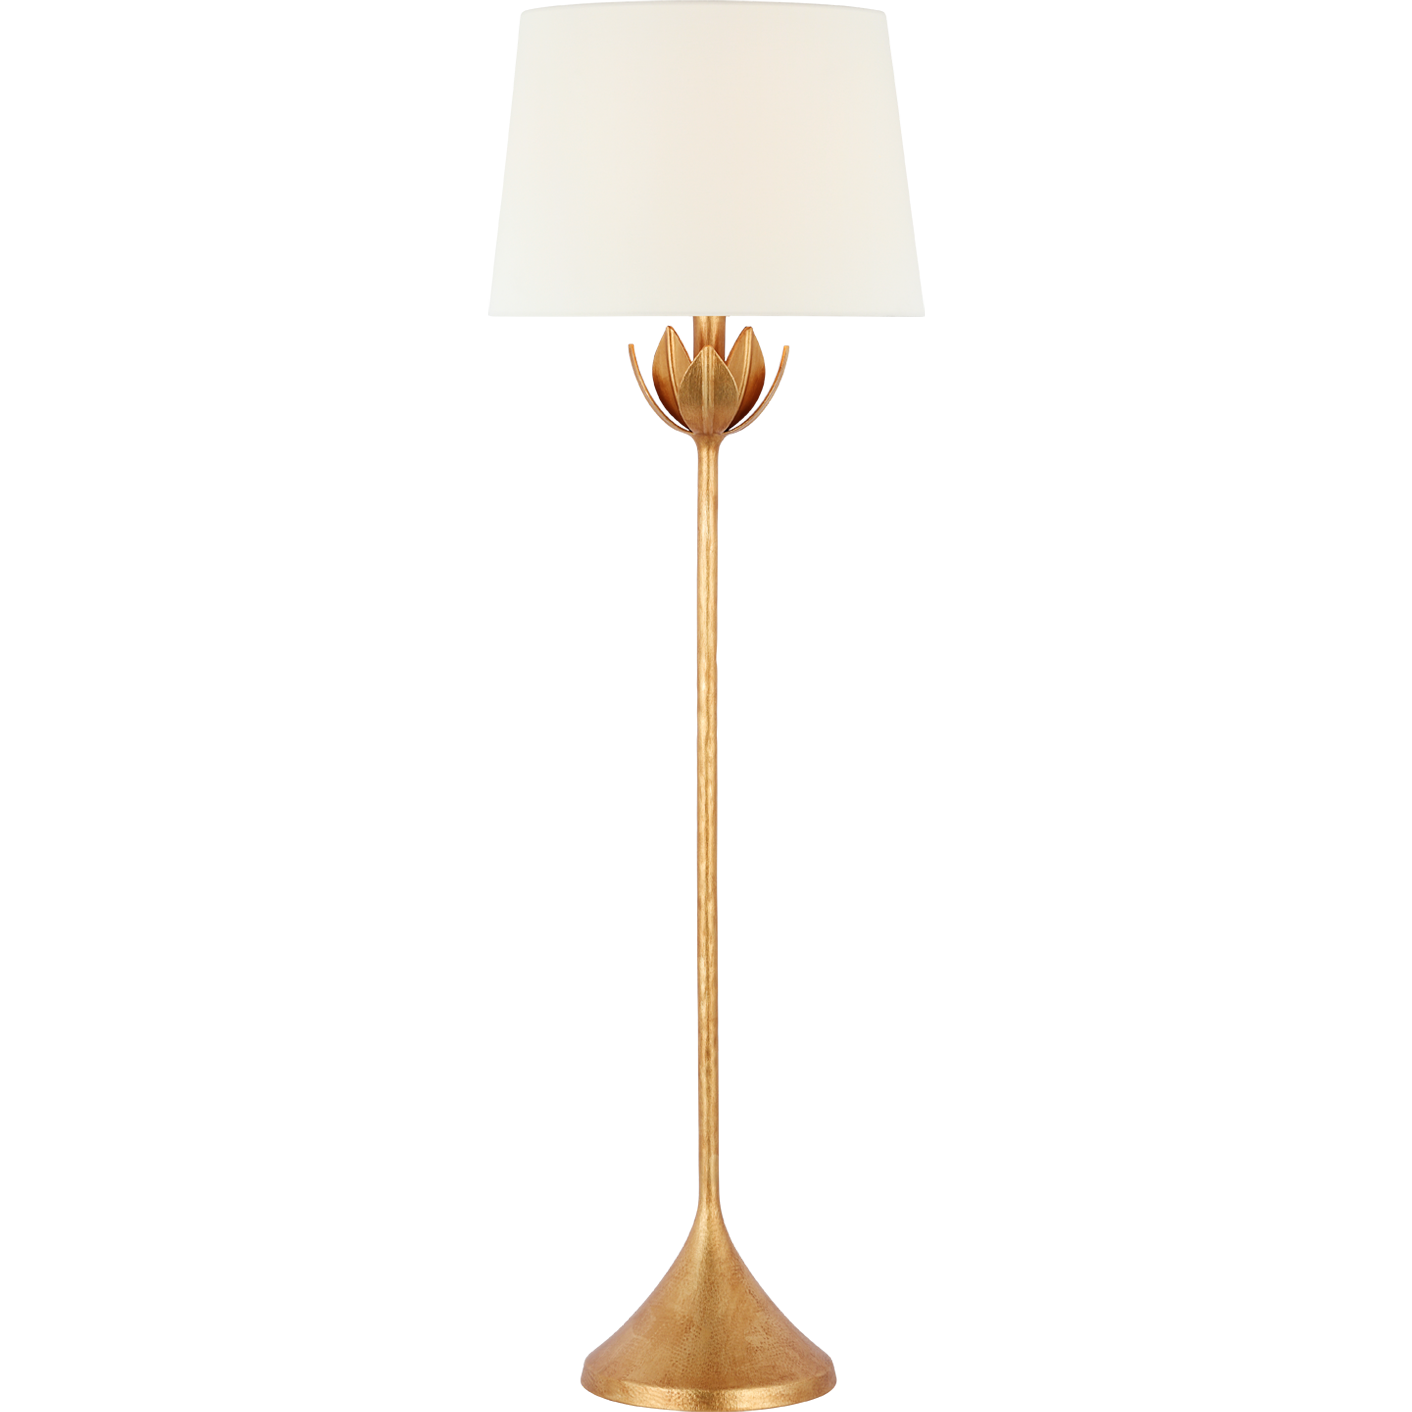 Alberto Large Floor Lamp